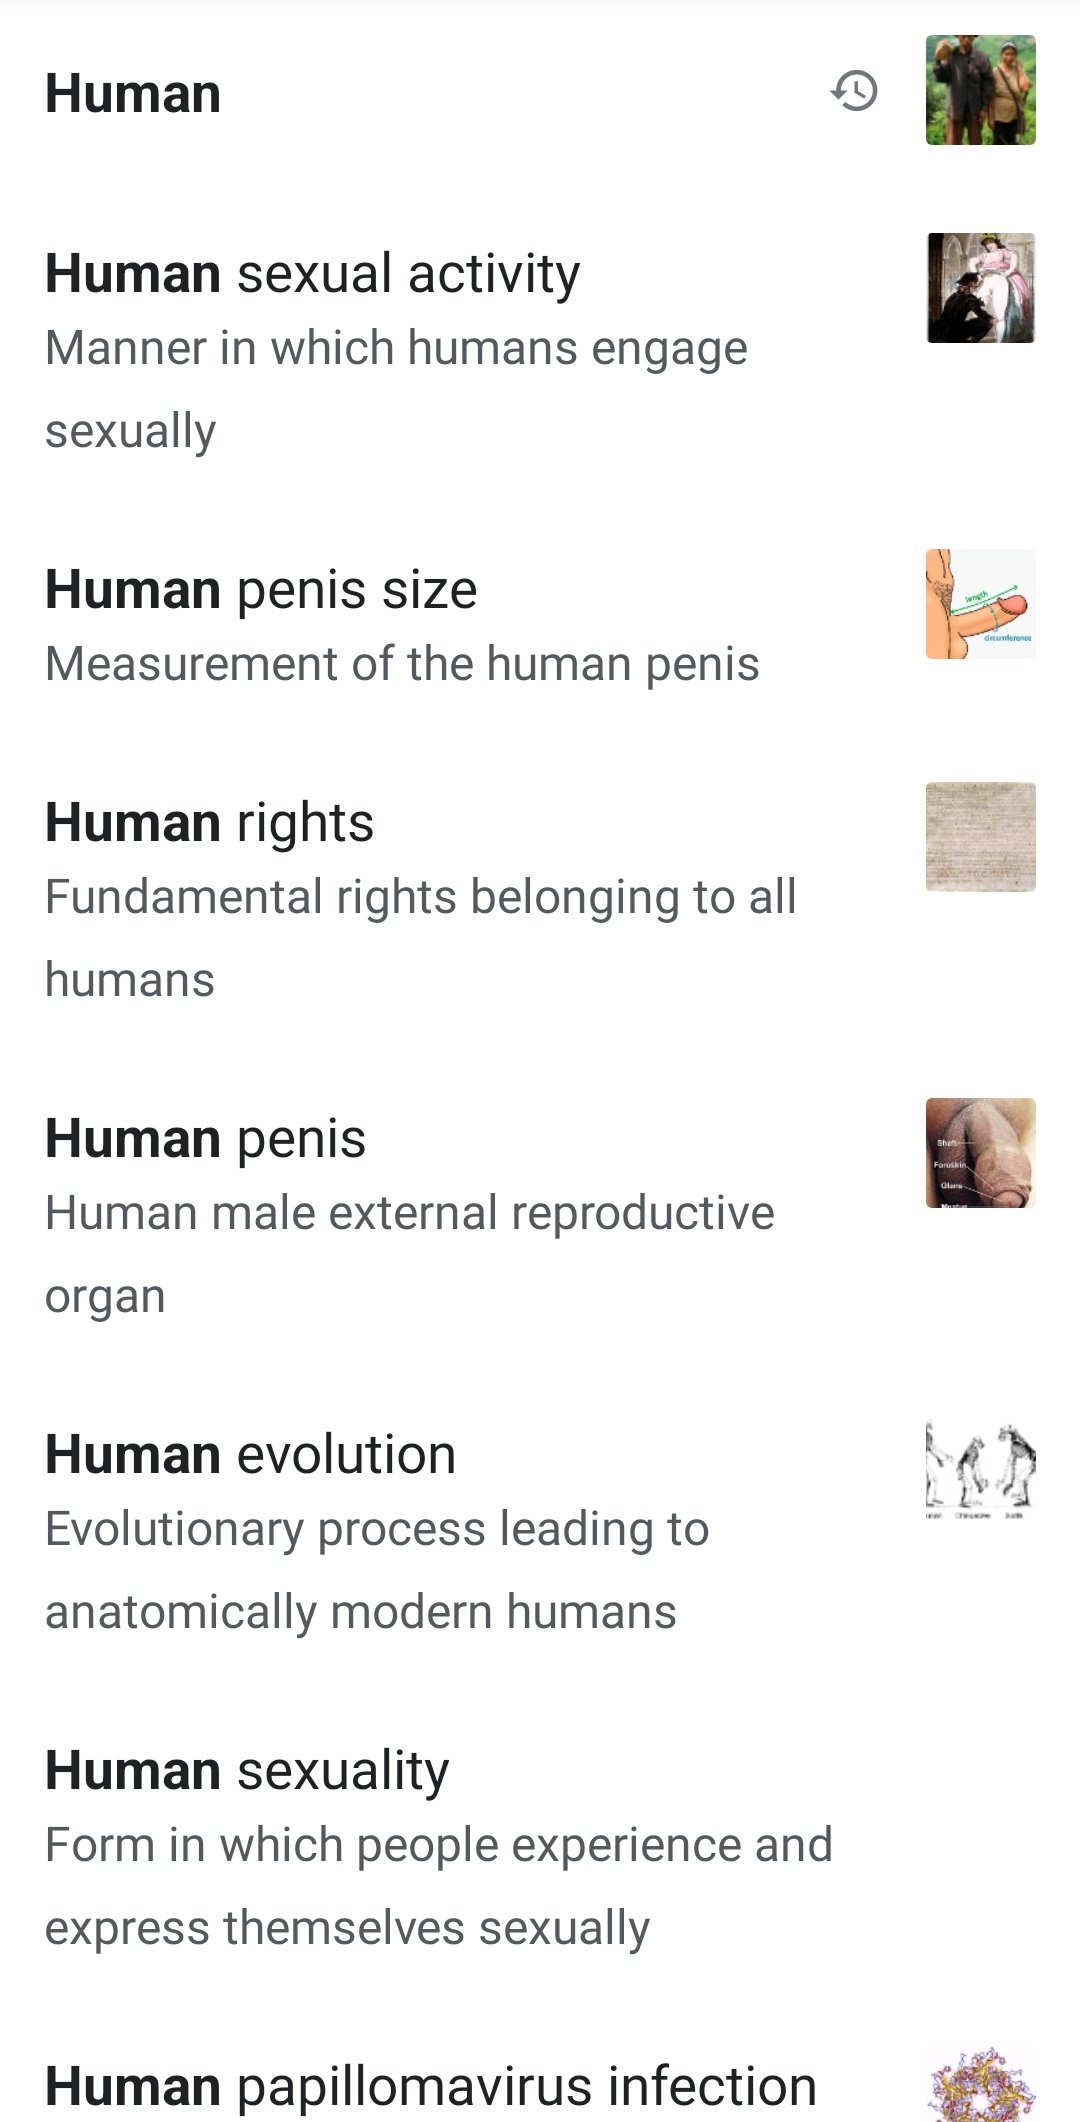 Human penis - Wikipedia